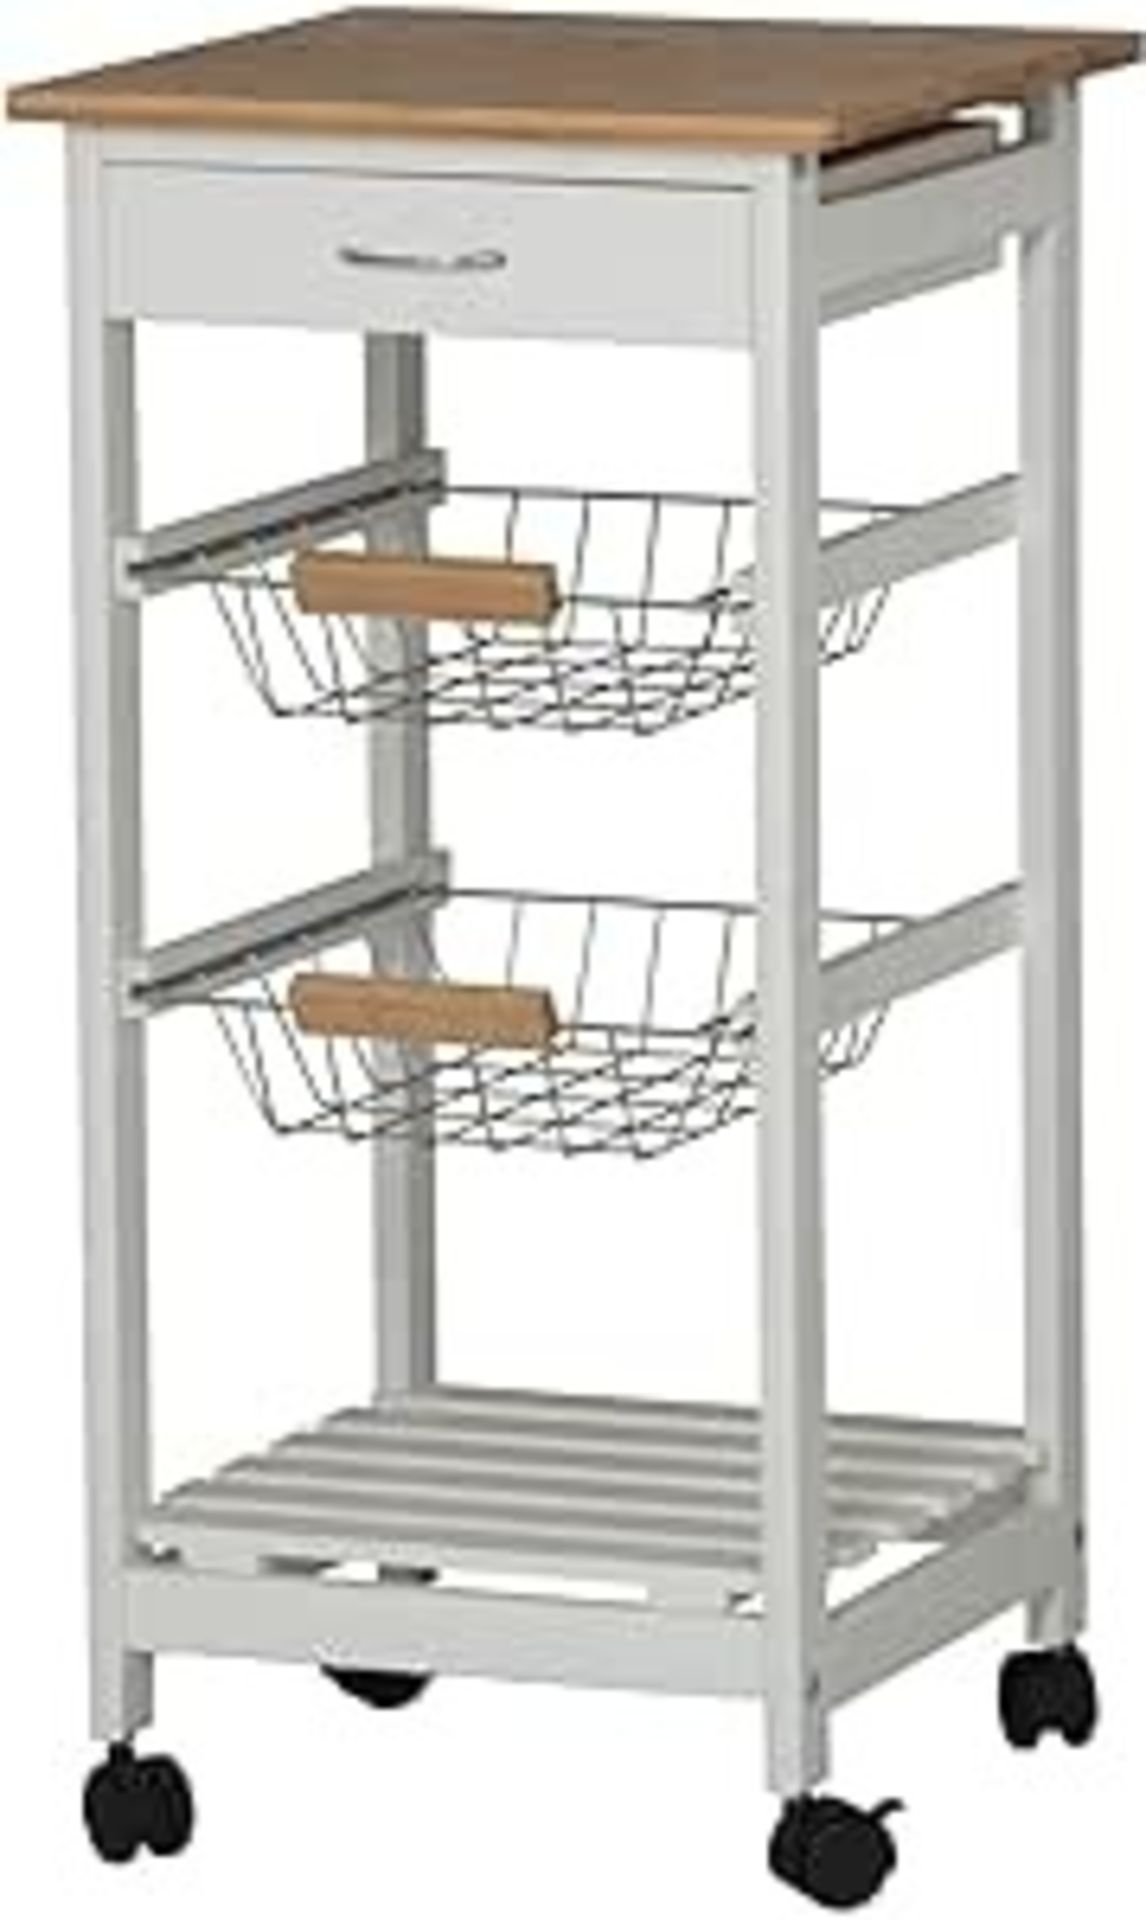 URBNLIVING 3 Tier Portable Oasis Bamboo Top MDF Kitchen Trolley Drawer Shelf Cart on Wheels - ER41